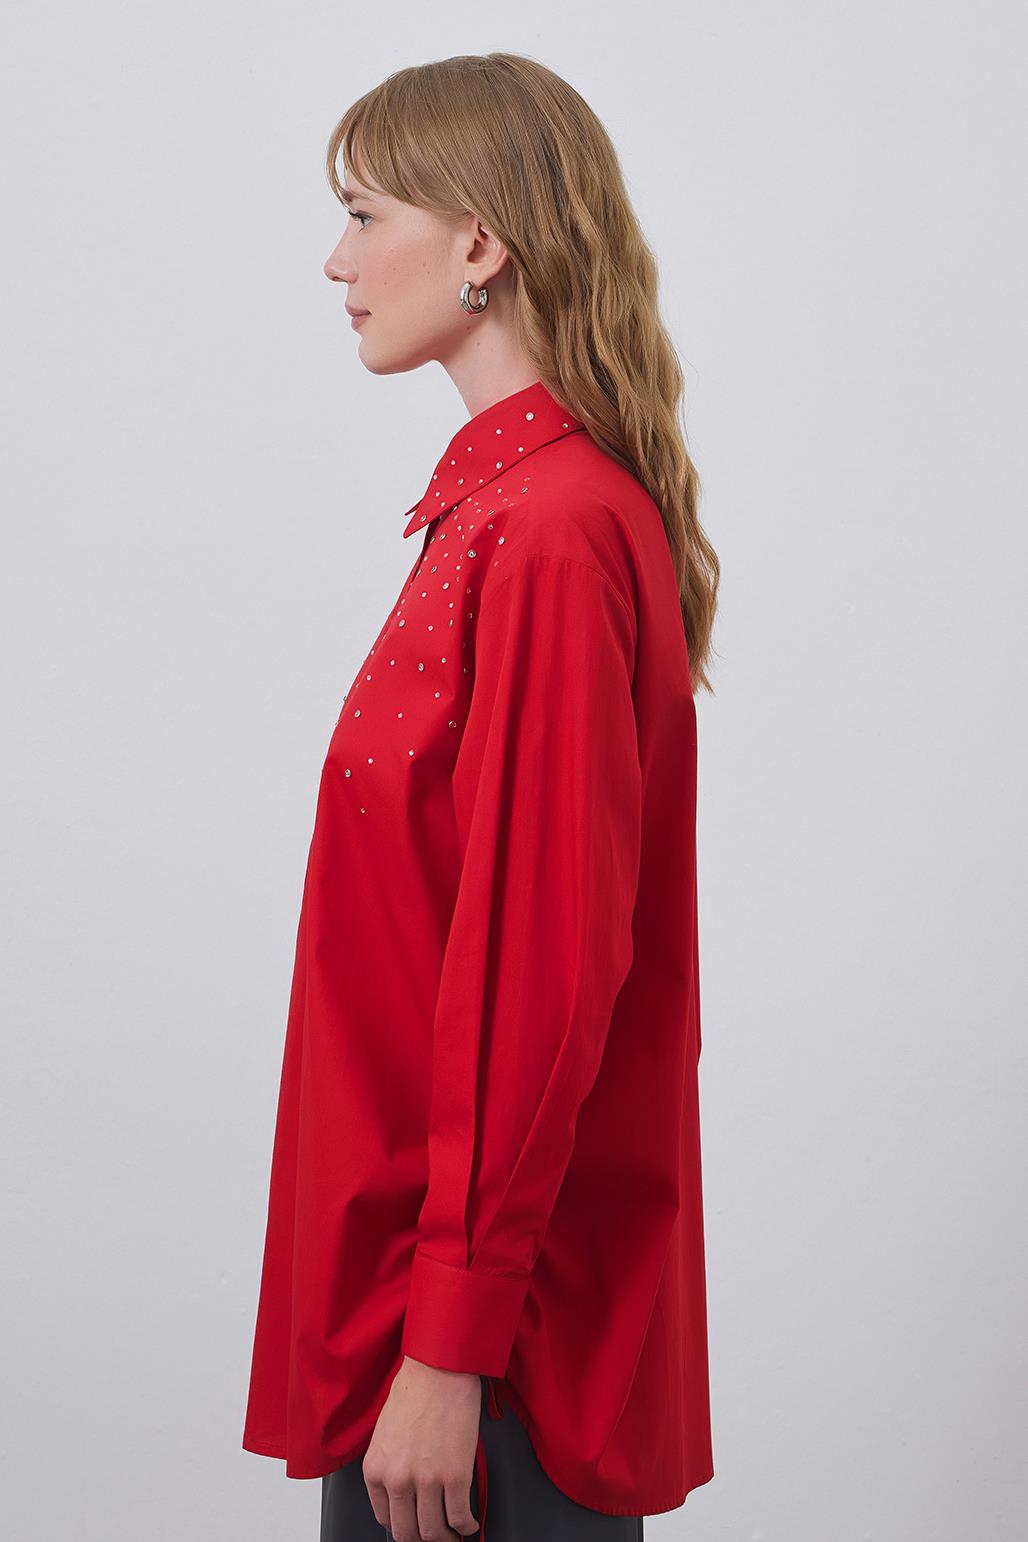 Anita Stone Shirred Shirt Red